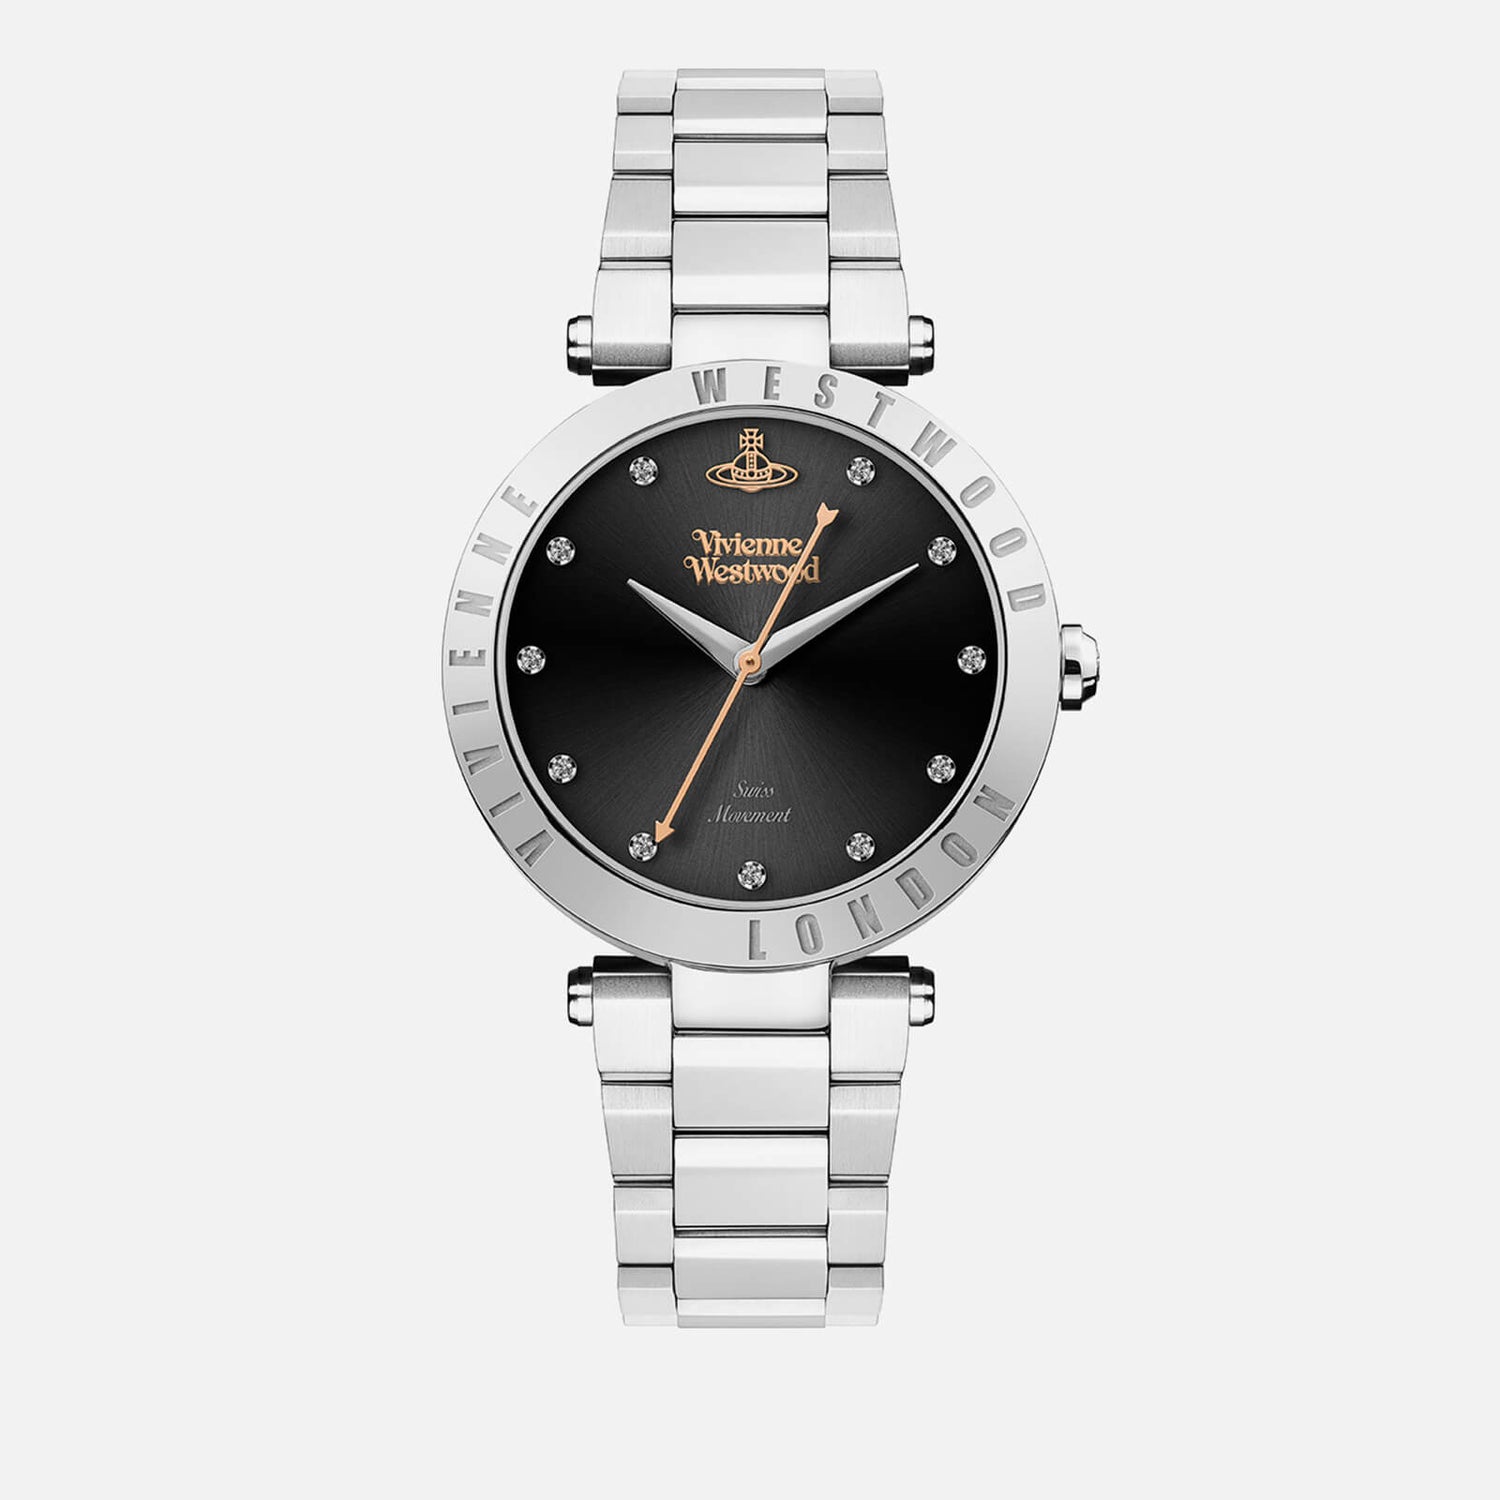 Vivienne Westwood Women's Montague II Watch - Silver